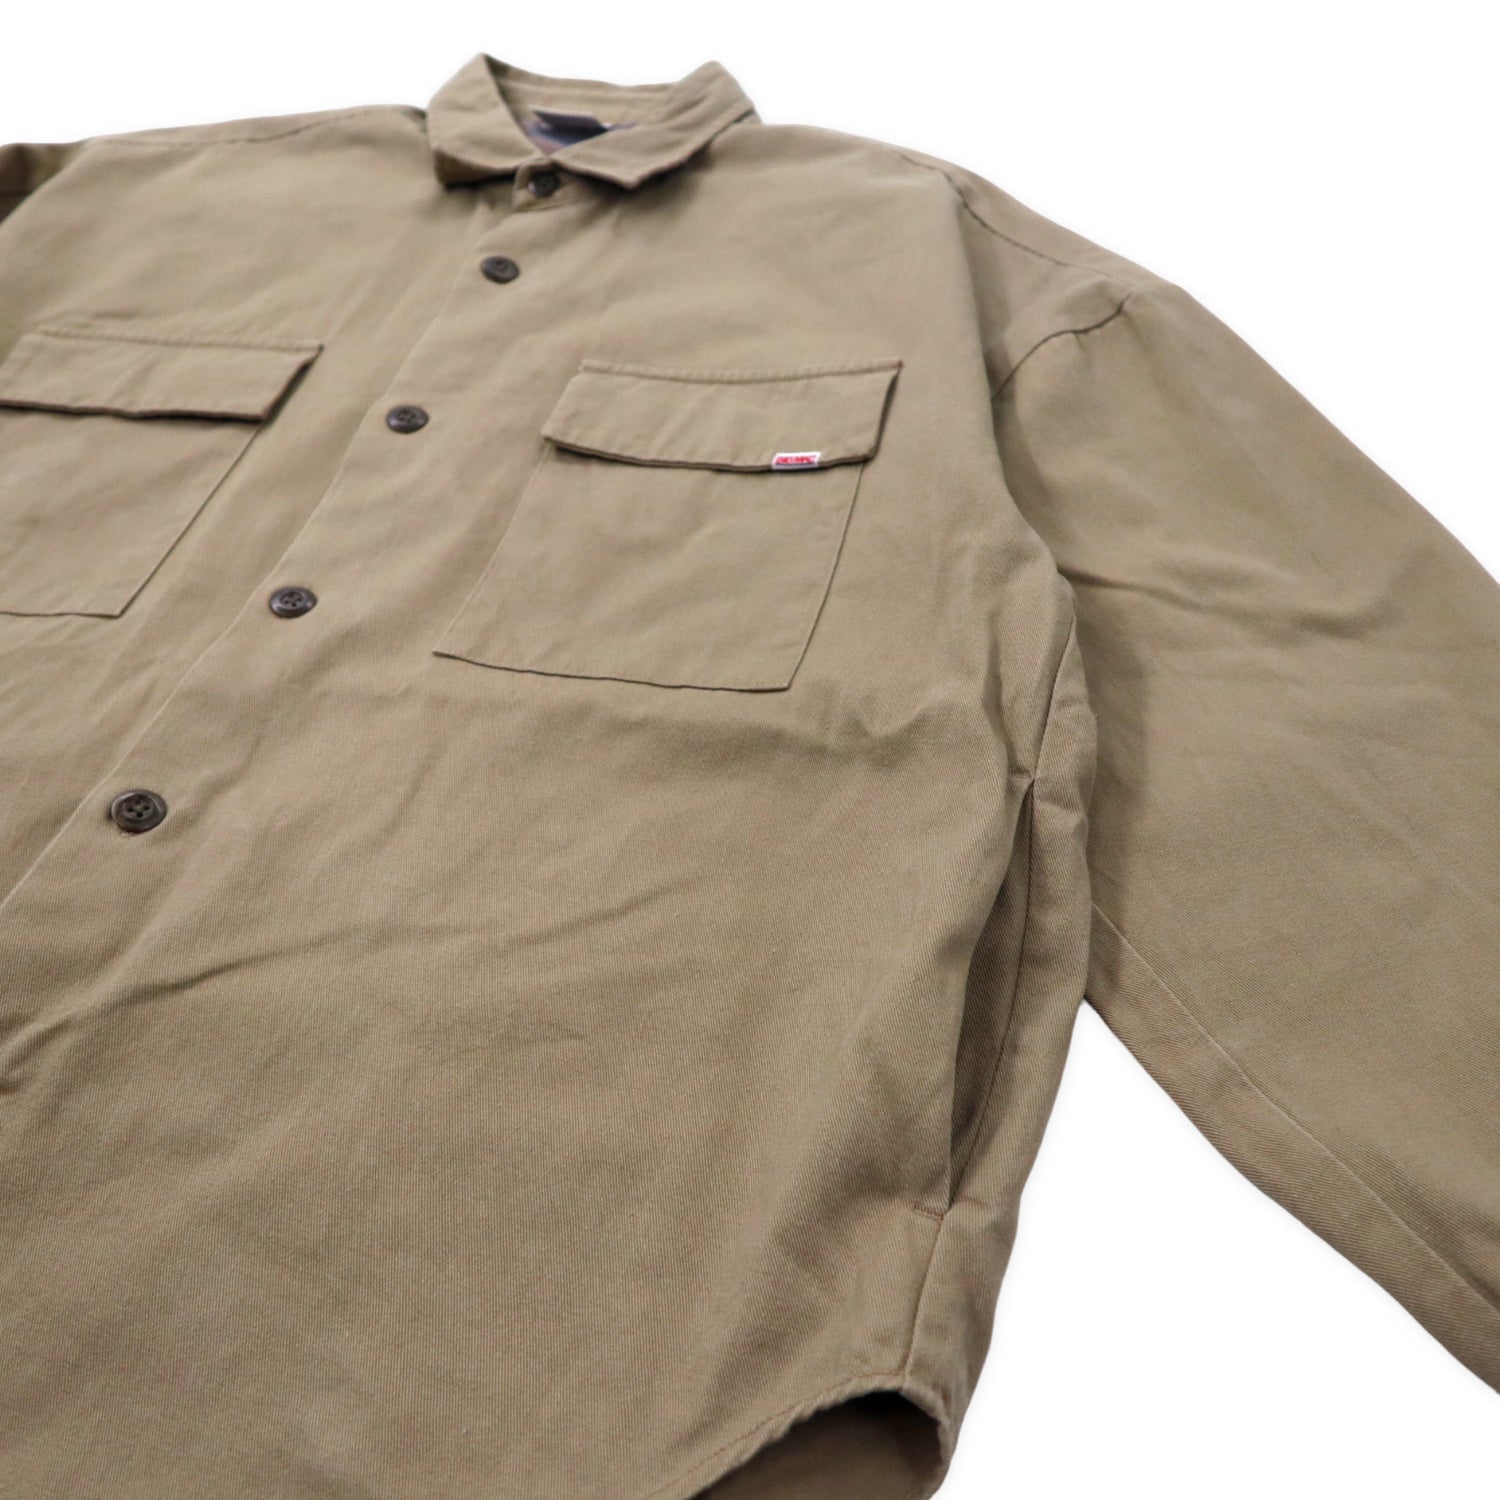 BIG MAC Over-sized Twill CPO Shirt Jacket Workshirt L Beige Cotton